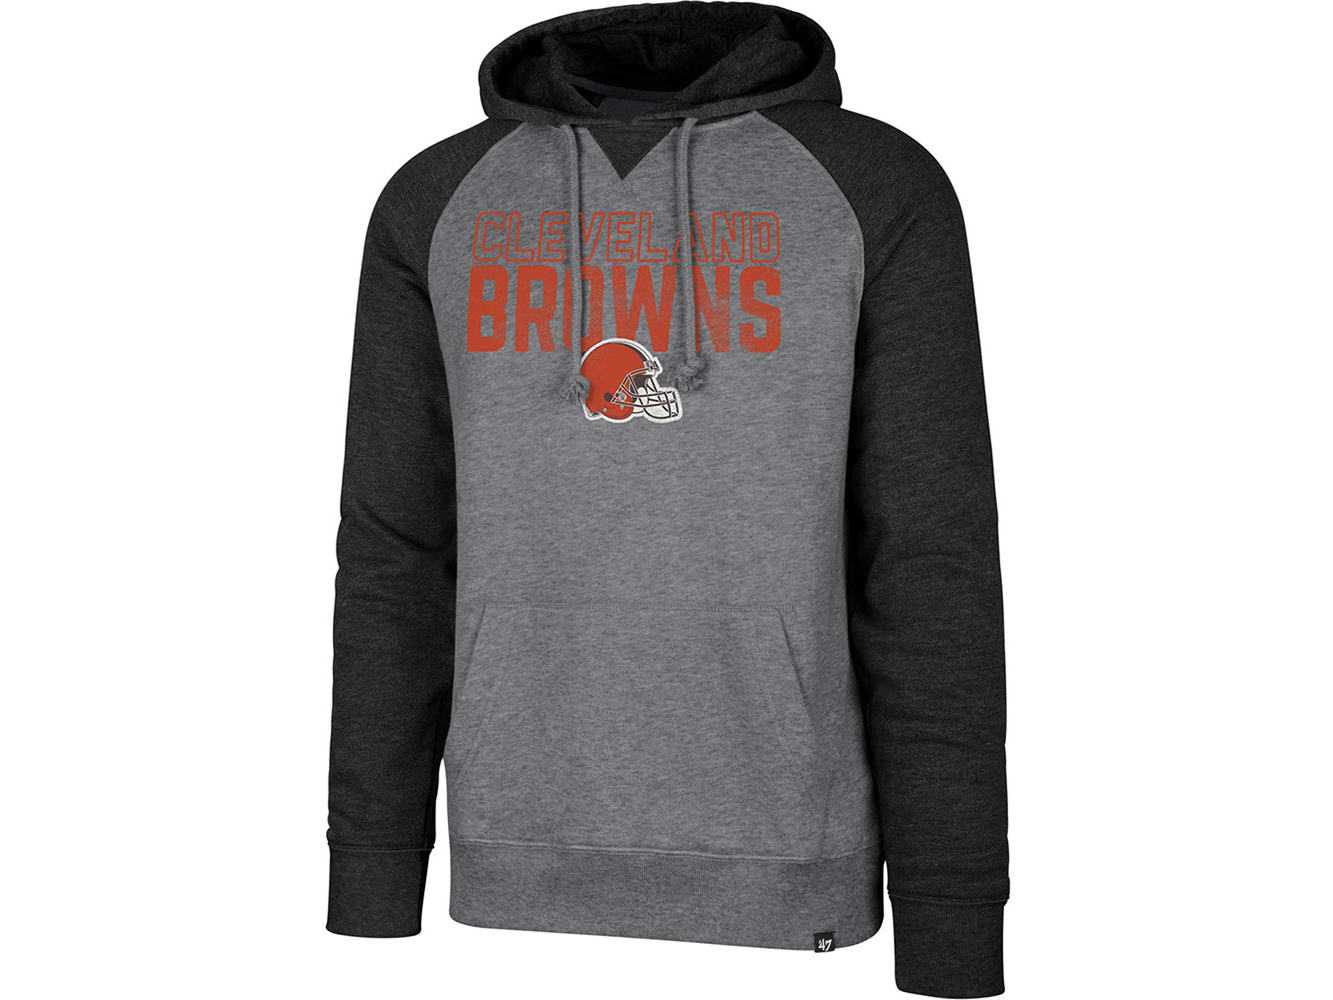  Cleveland Browns Crewneck Sweatshirts